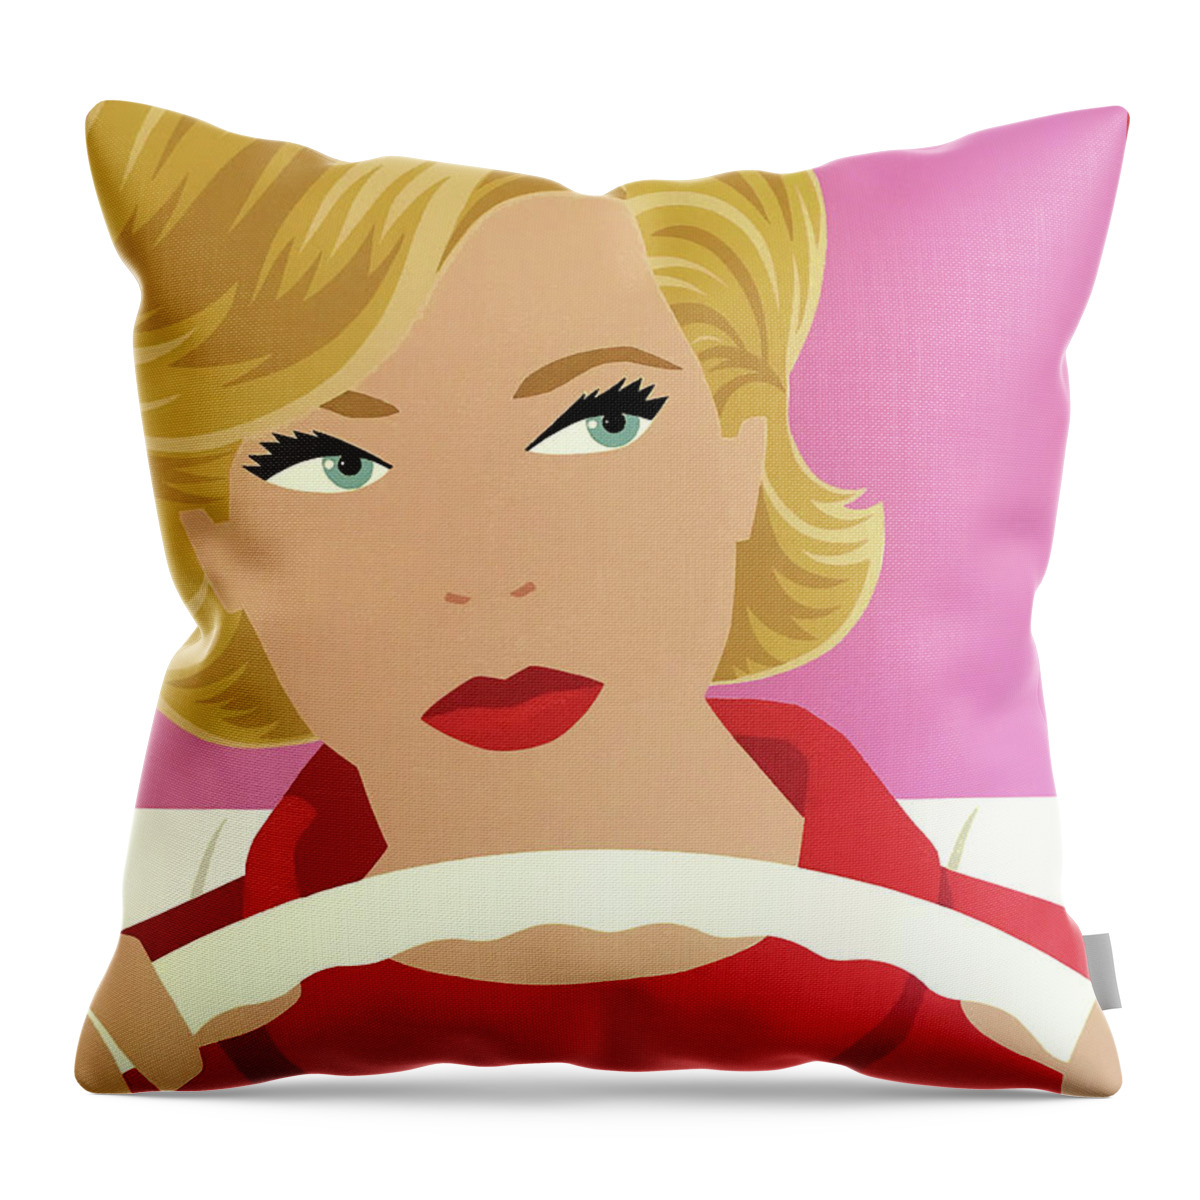 Mission Impossible Throw Pillow featuring the digital art Barbara Bain by Mary Lynn Blasutta